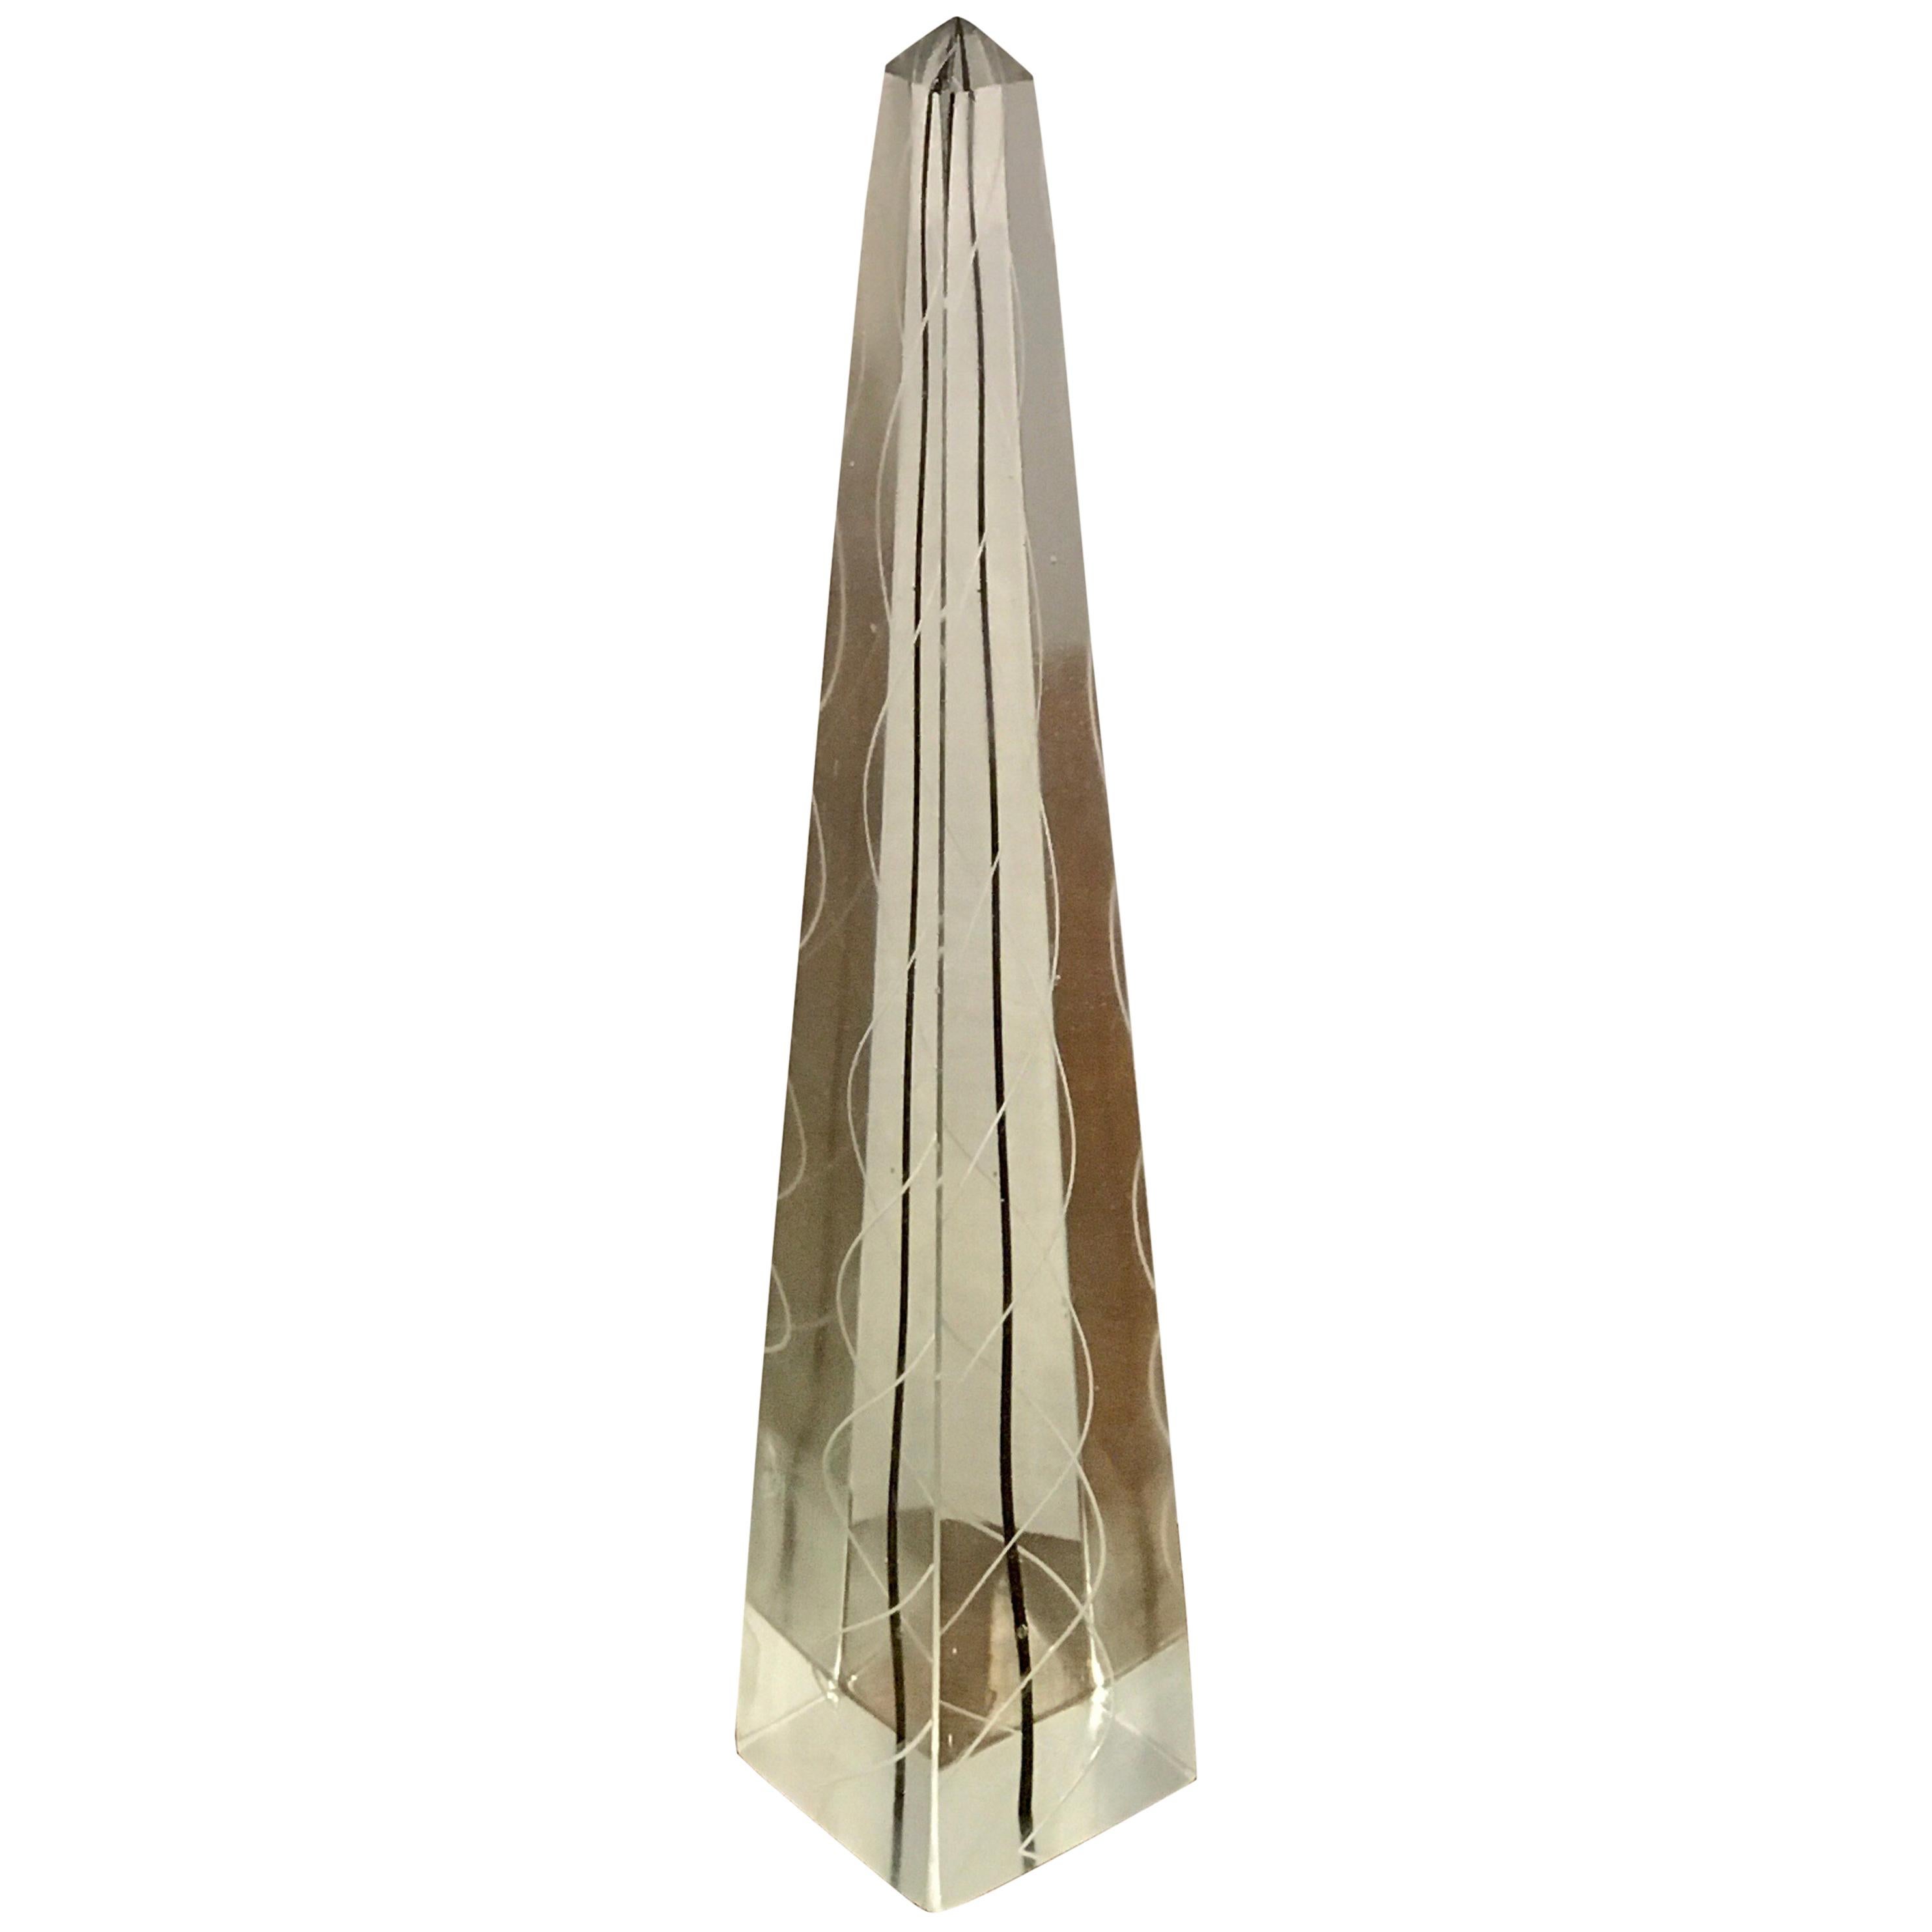 Black and White Murano Glass Obelisk